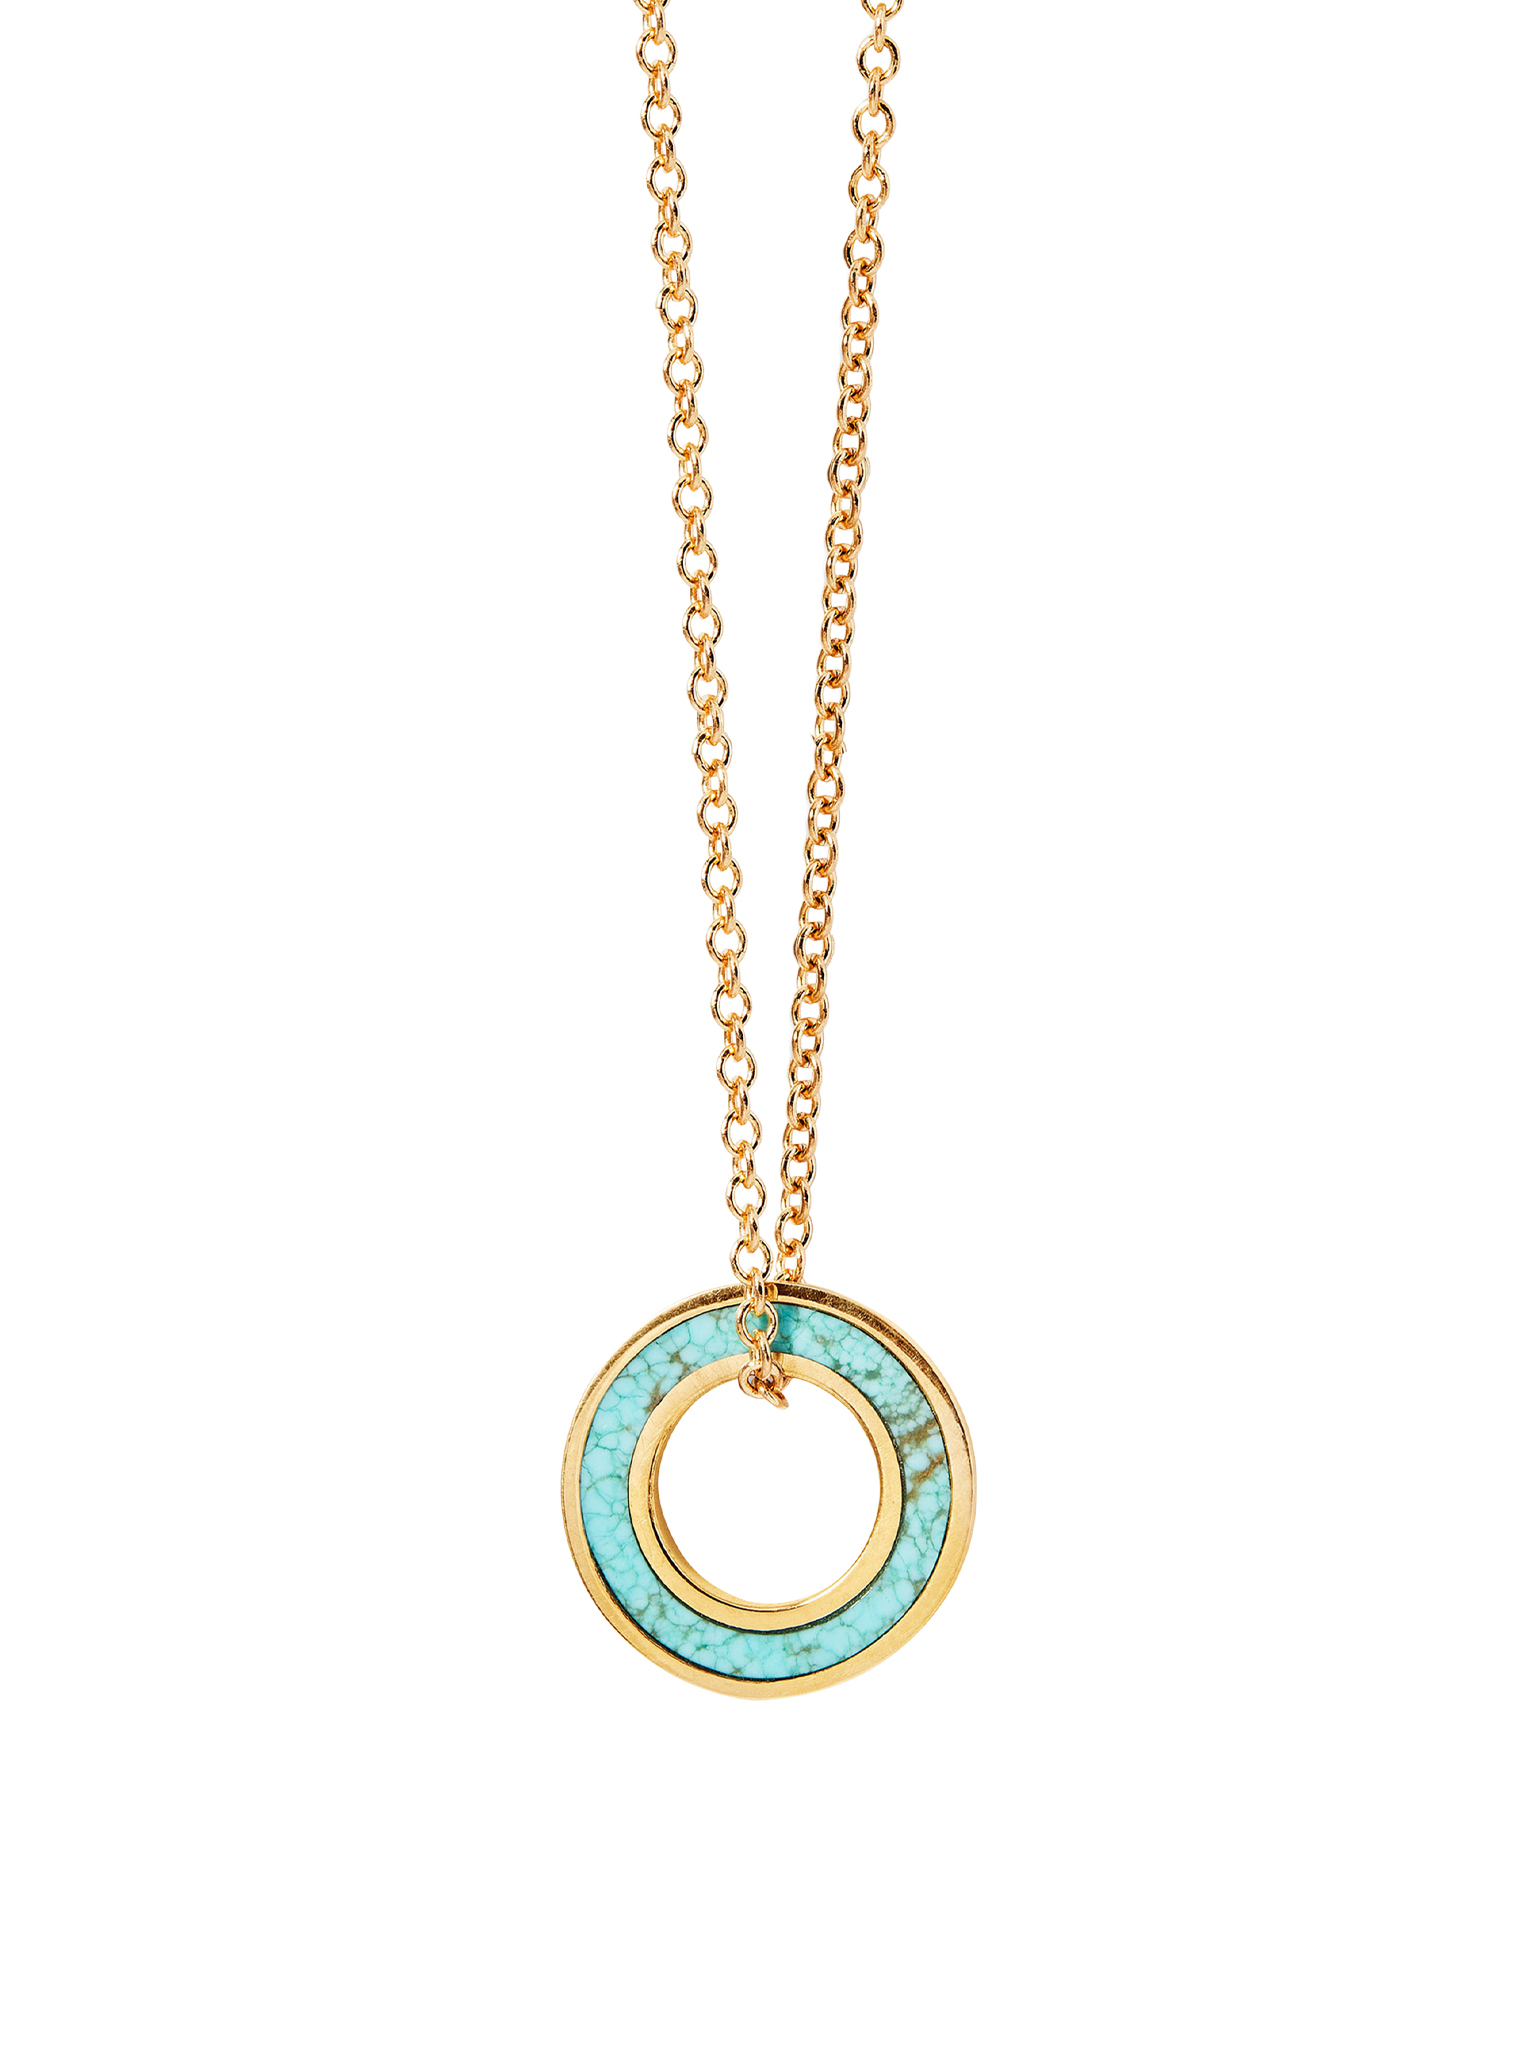 Orbit turquoise pendant necklace